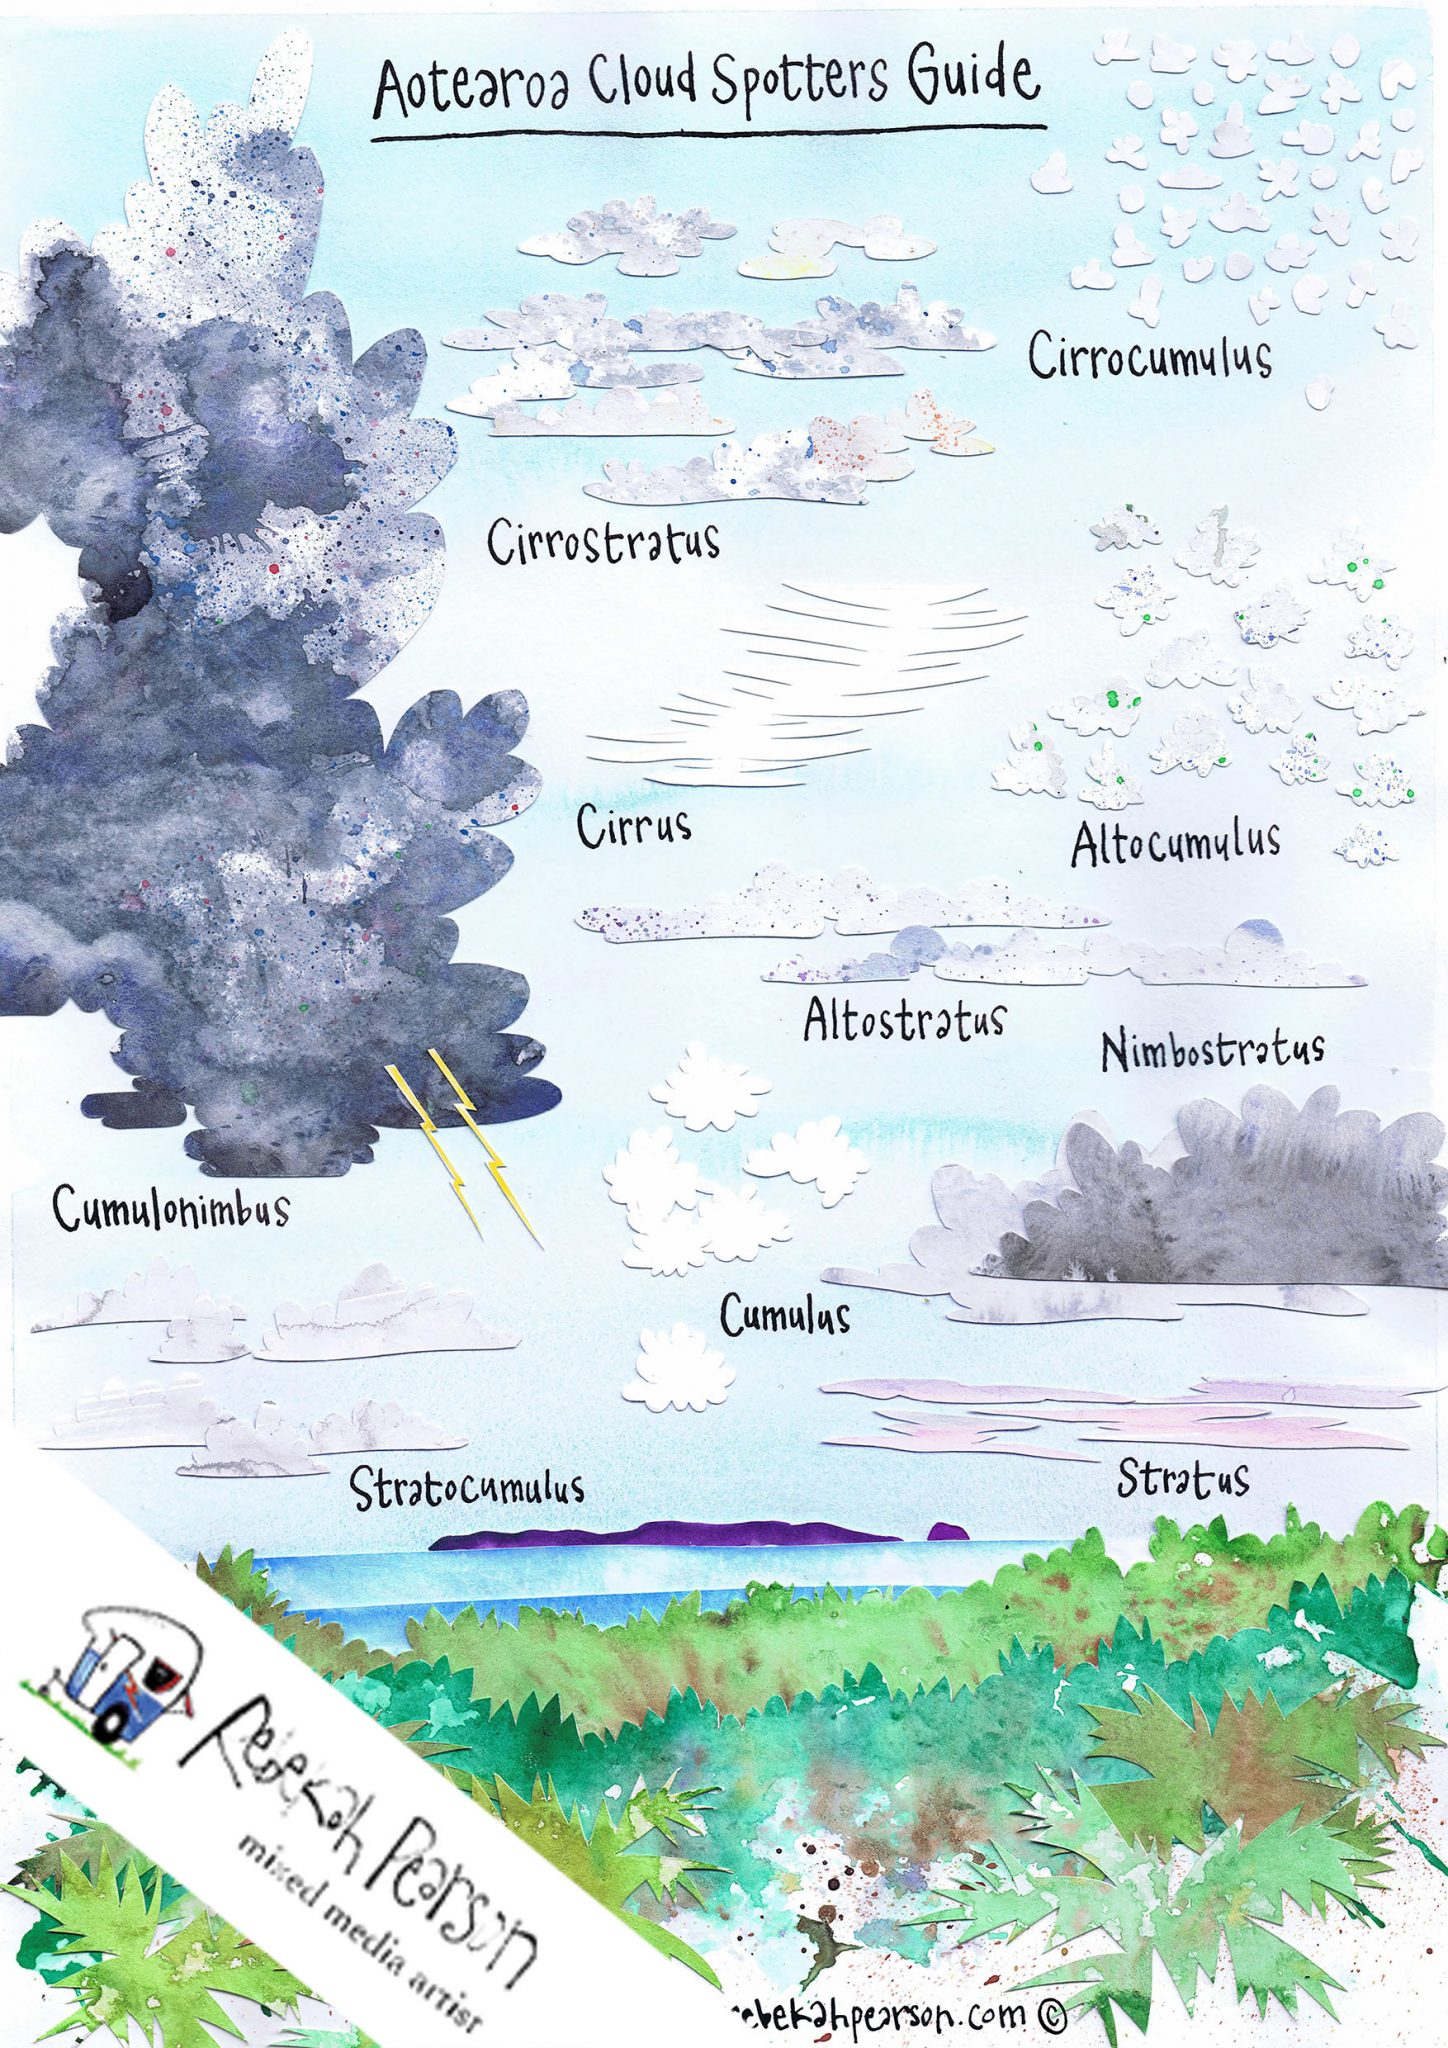 Aotearoa Cloud Spotting Guide Poster | Rebekah Pearson Art